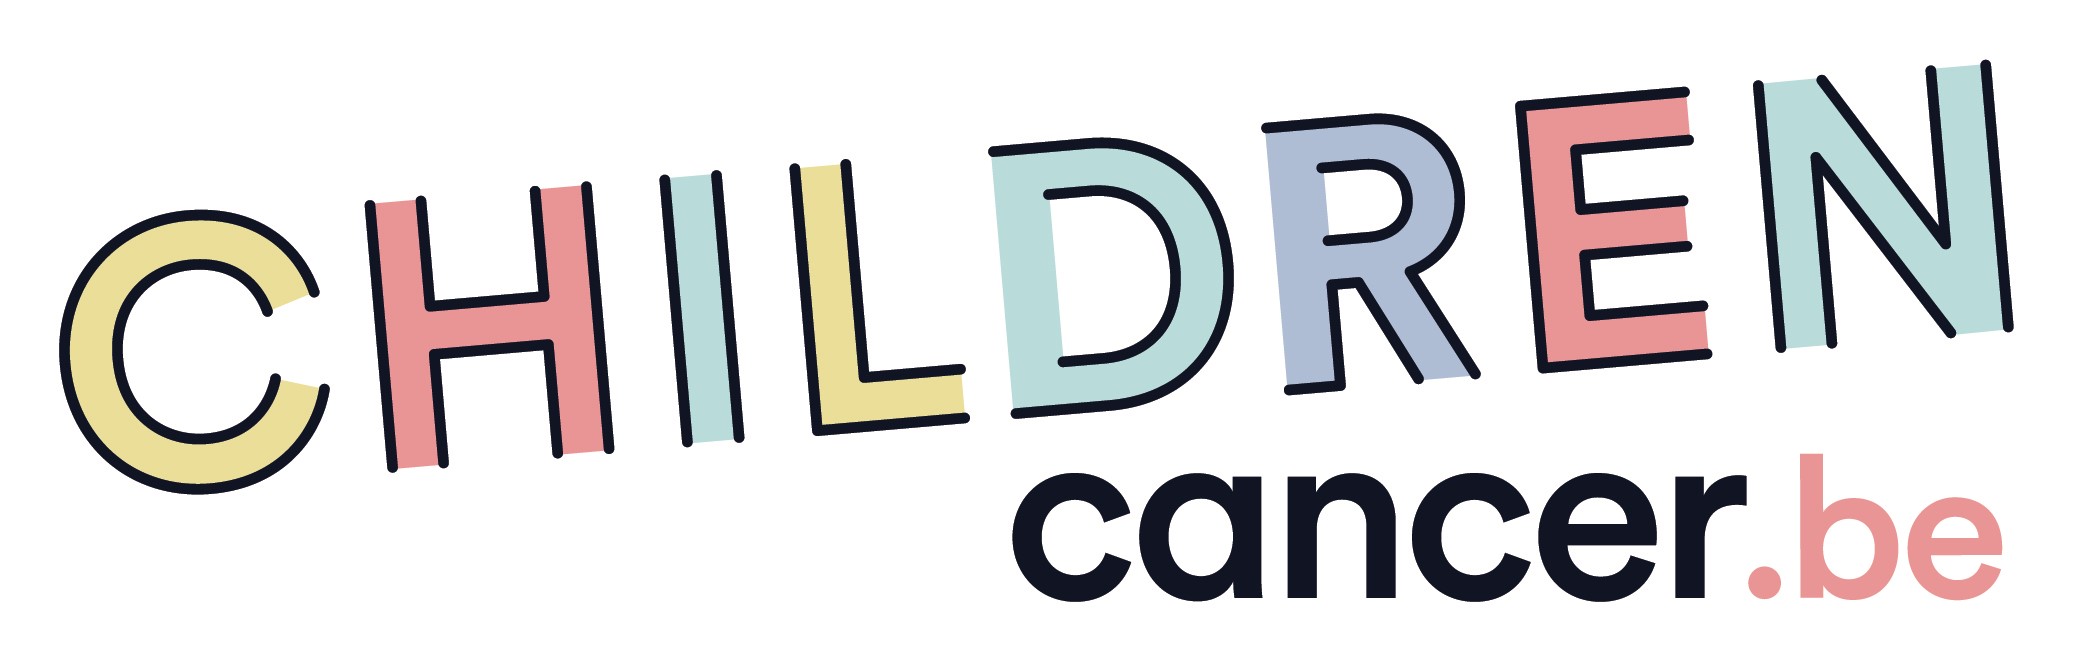 Logo Childrencancer